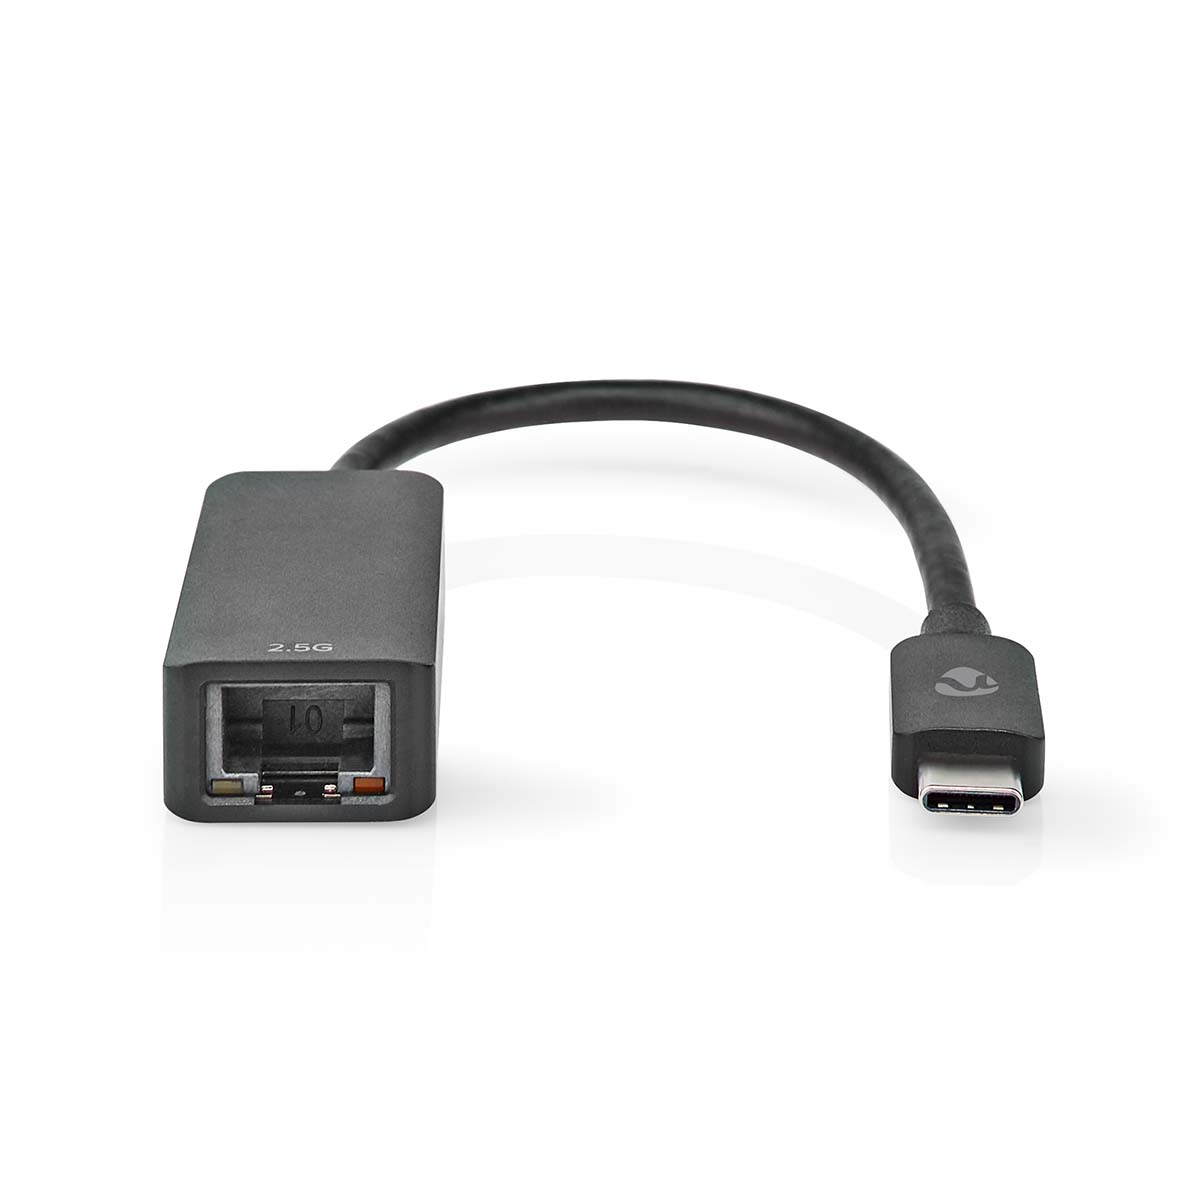 CCGB64960BK02, NEDIS USB-Netzwerkadapter